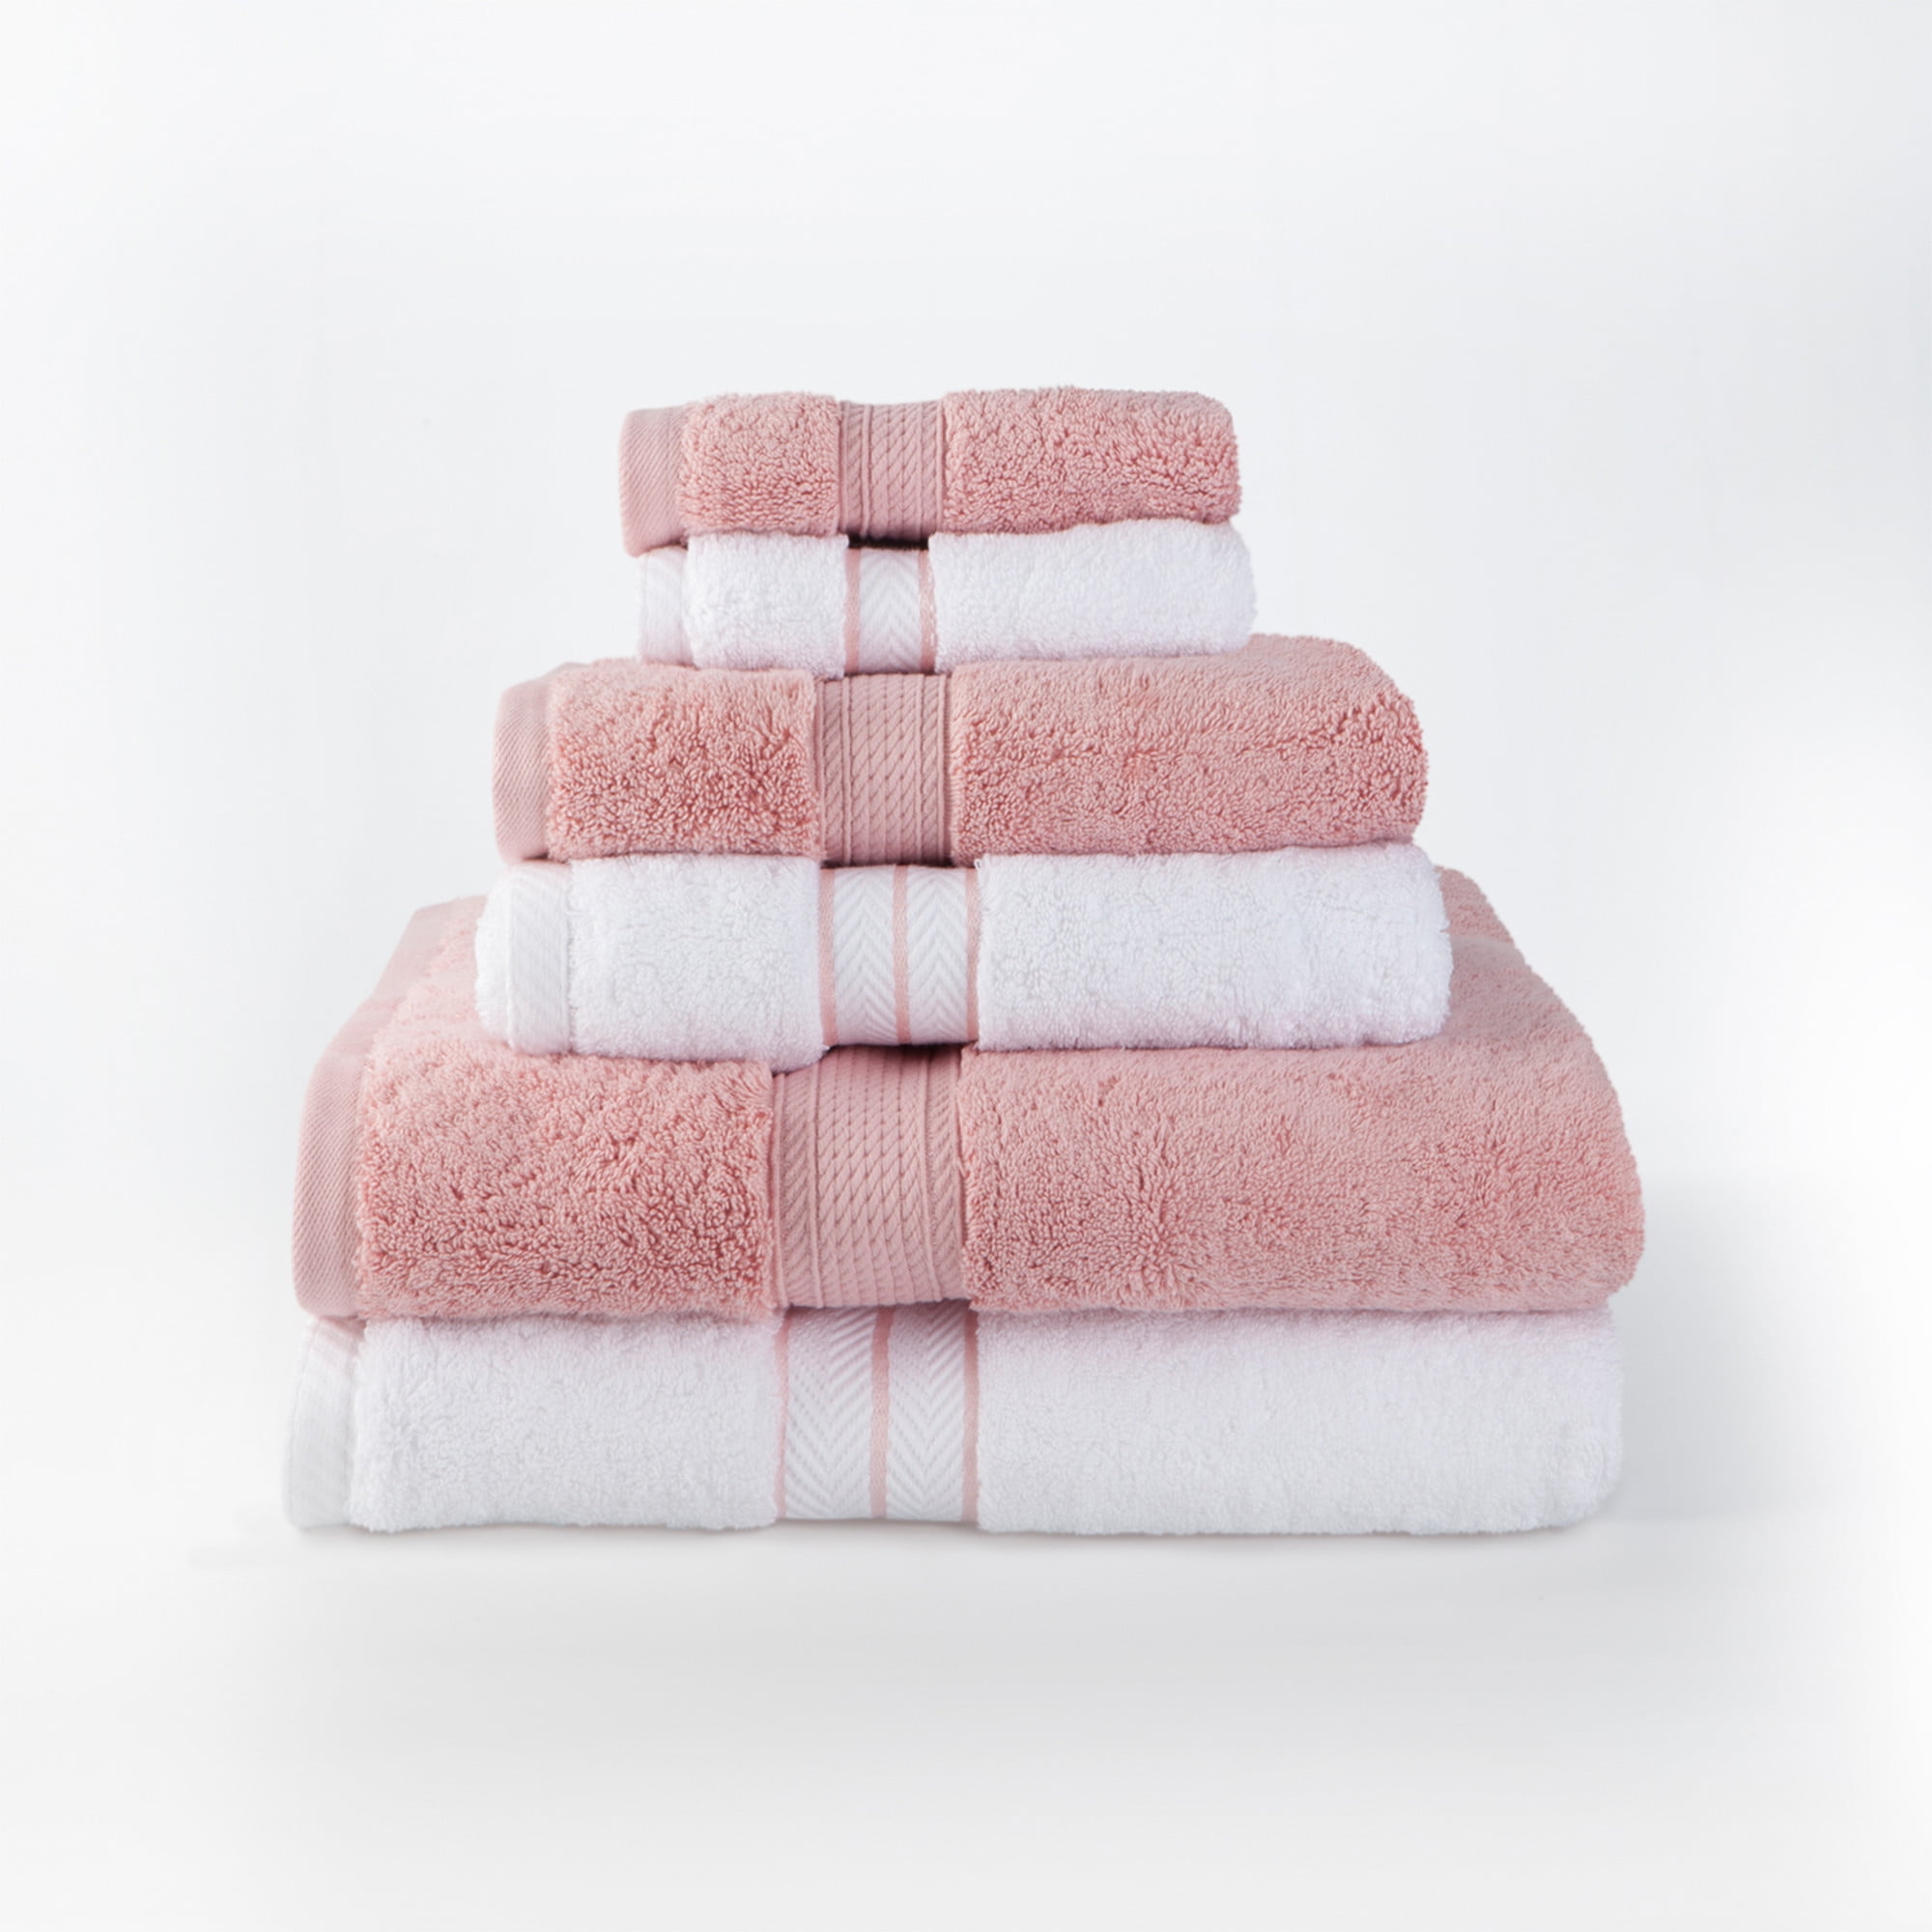 Superior Hymnia Egyptian Cotton 6-Piece Towel Set, Tea Rose - Walmart.com